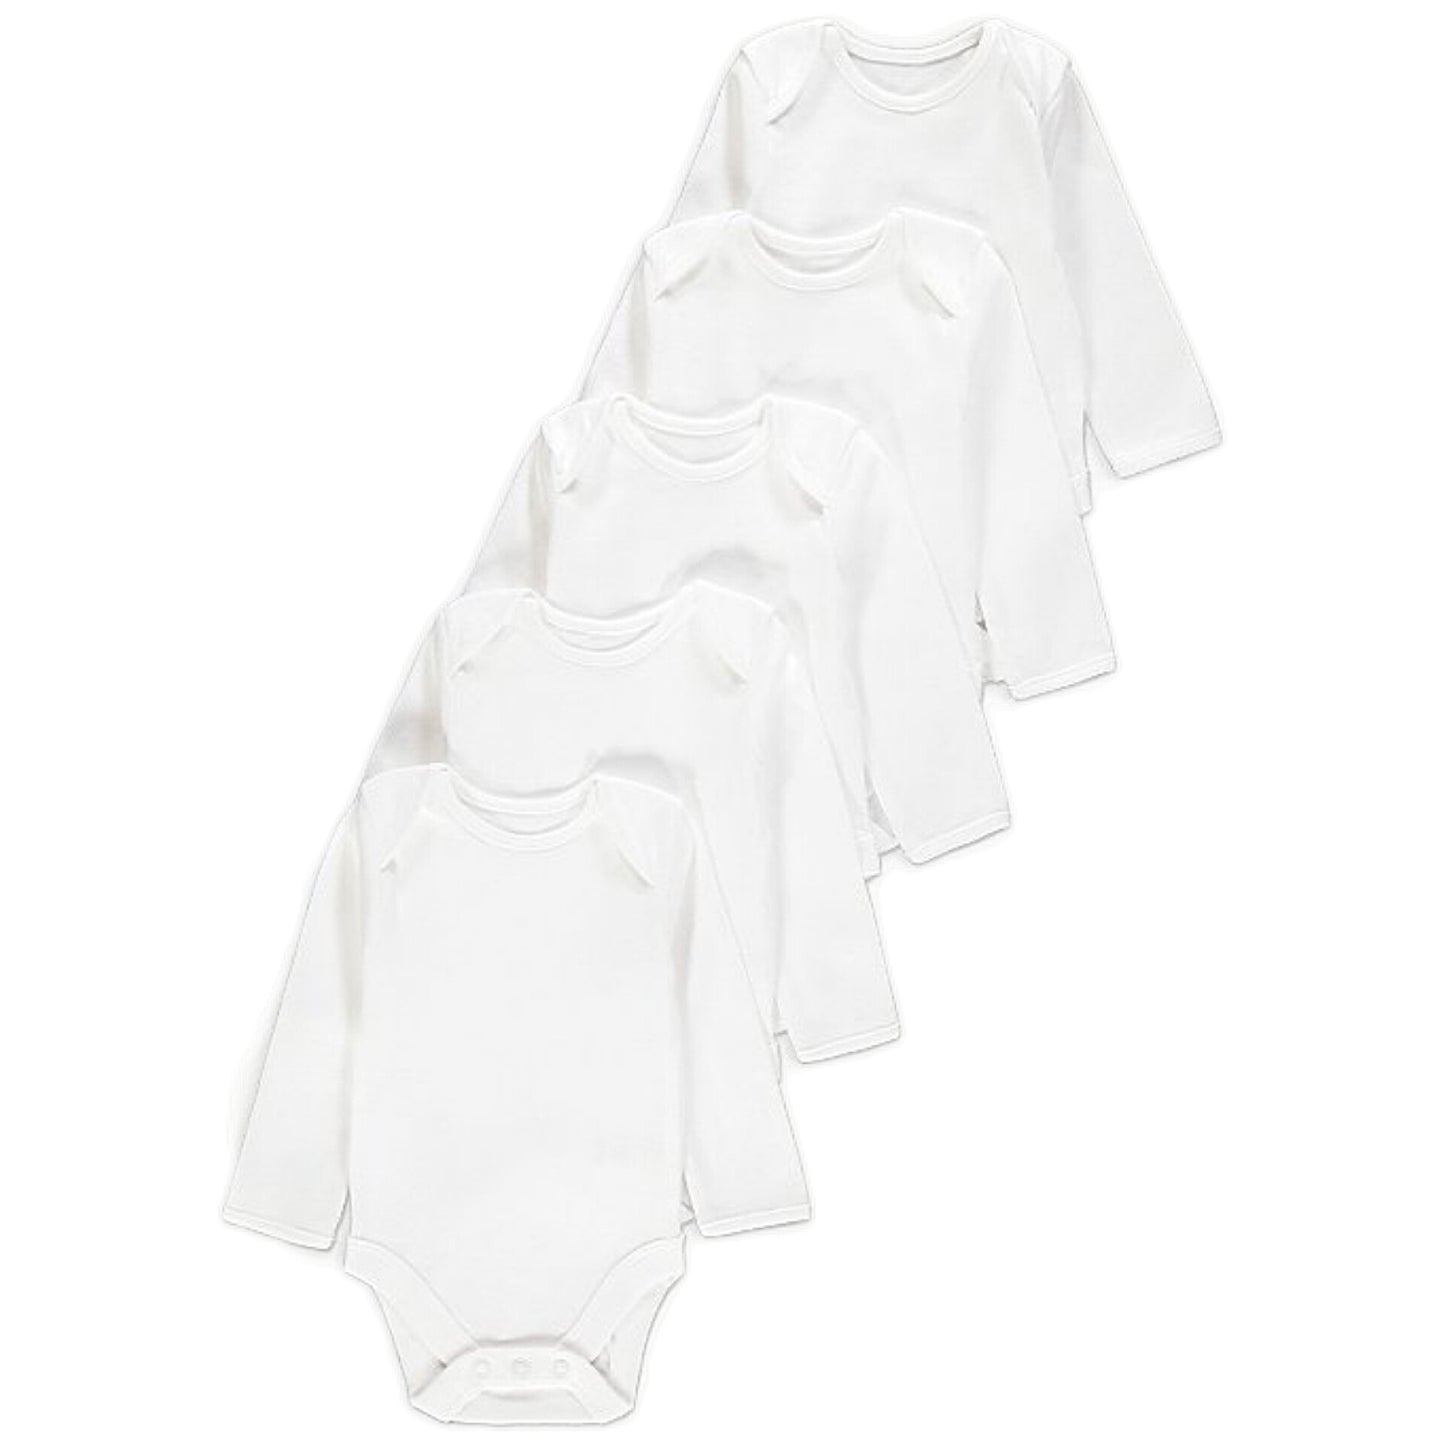 3-6m White Long Sleeve Bodysuits 5 Pack - Diaper Yard Gh